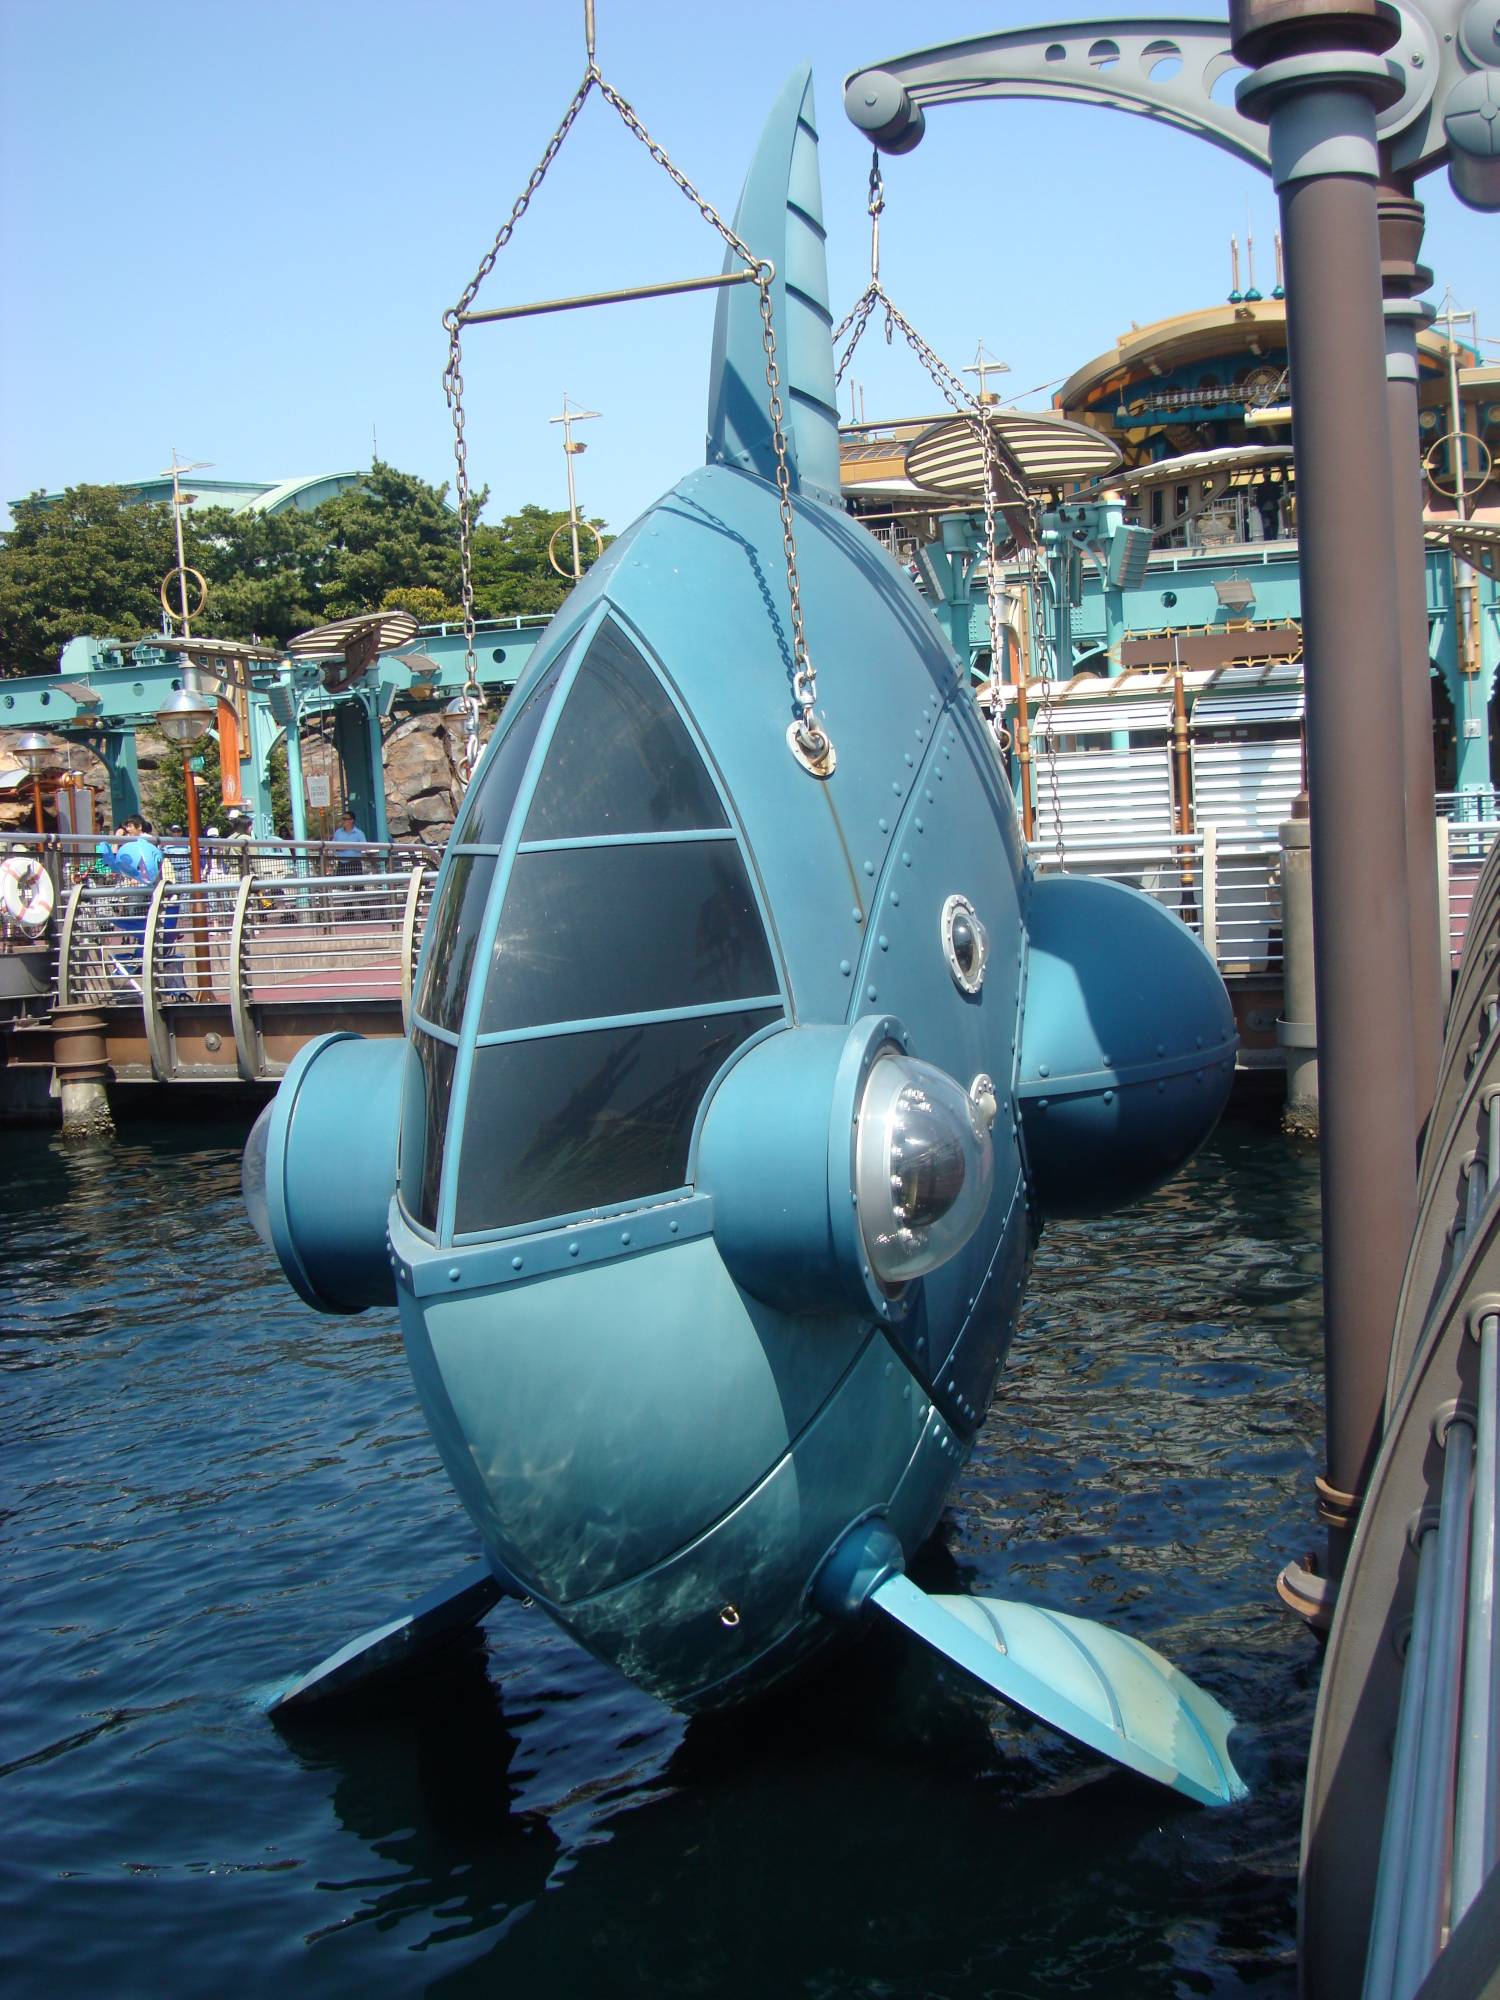 Tokyo DisneySea - Port Discovery